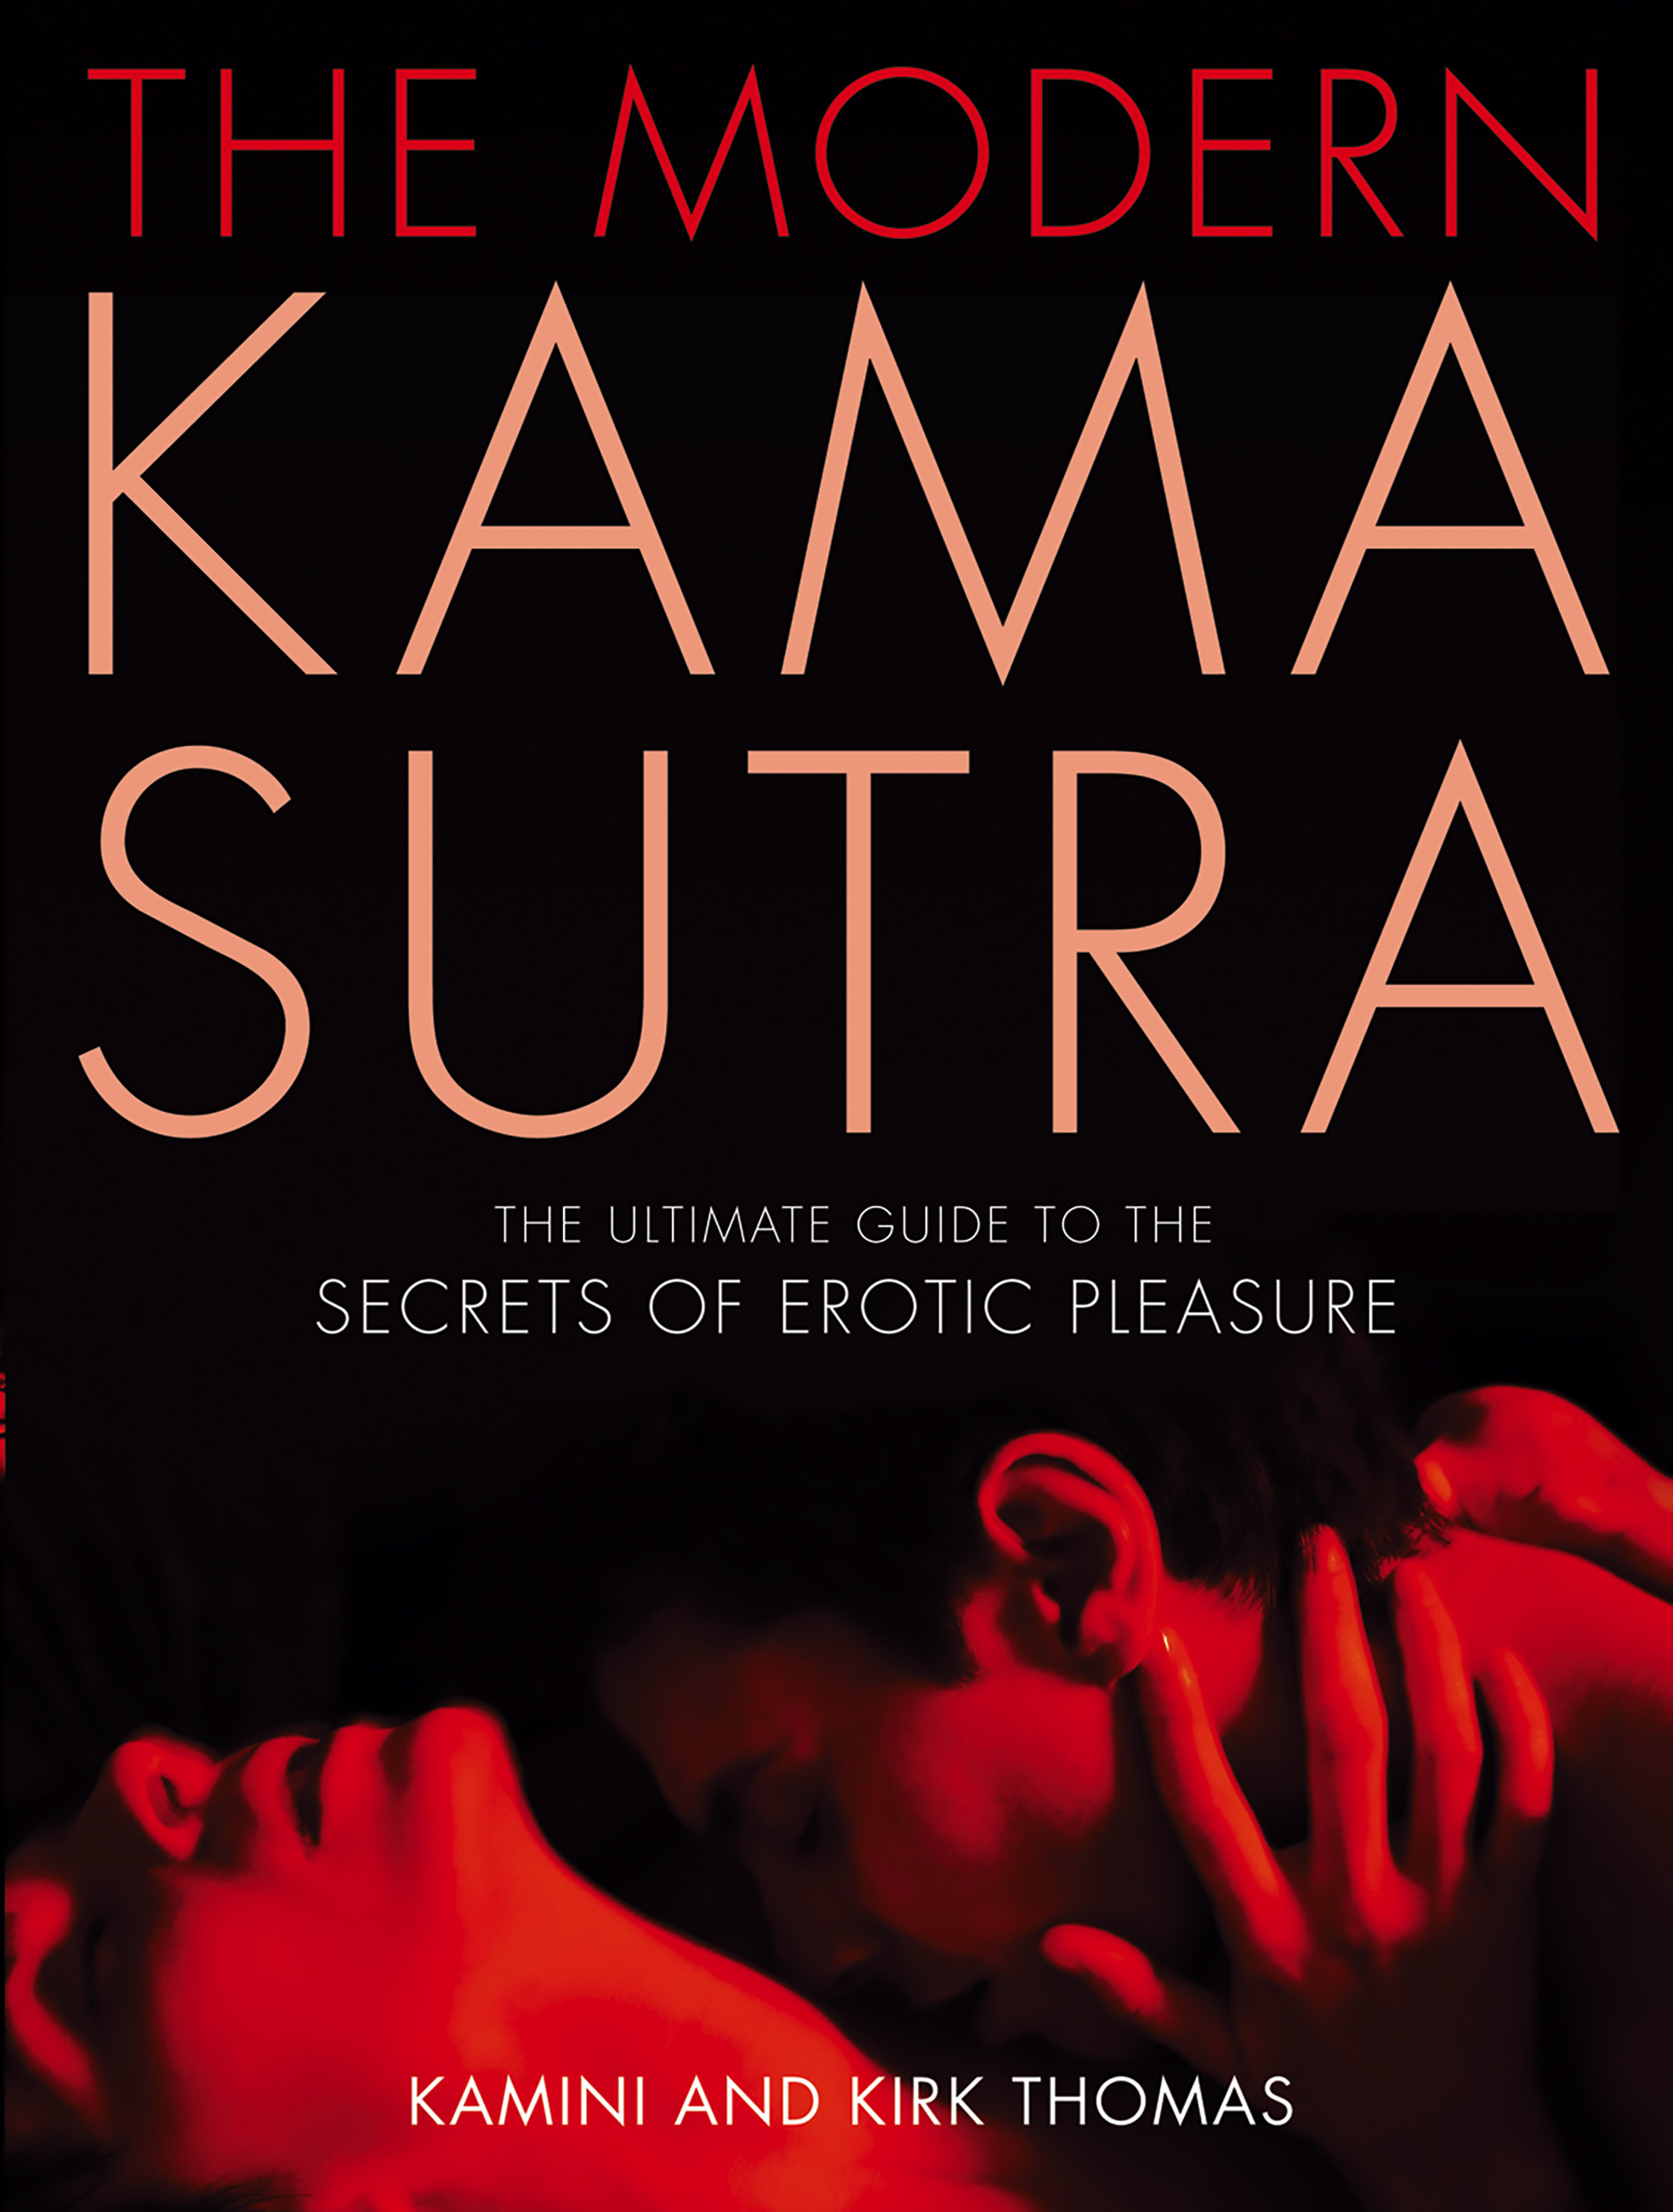 karma sutra diagrams pdf download free